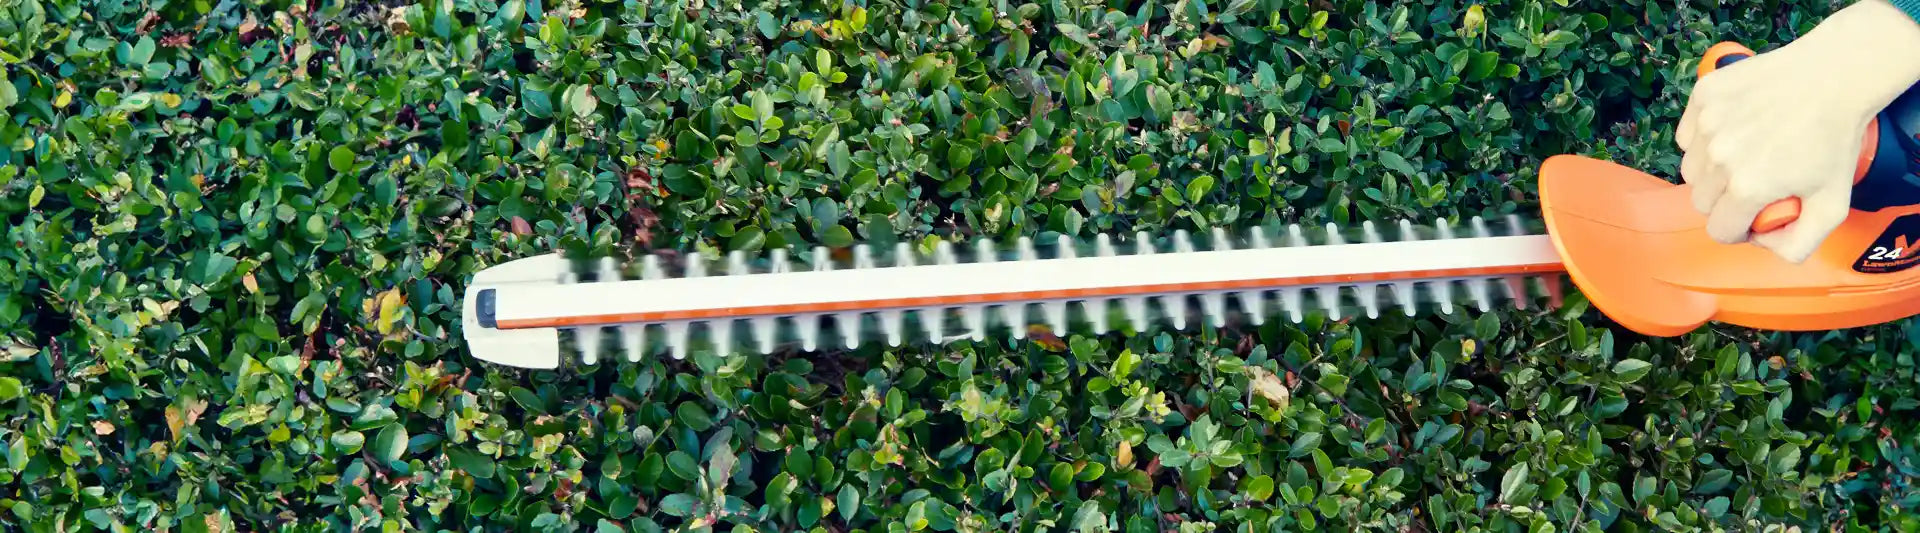 LawnMaster hedgecare